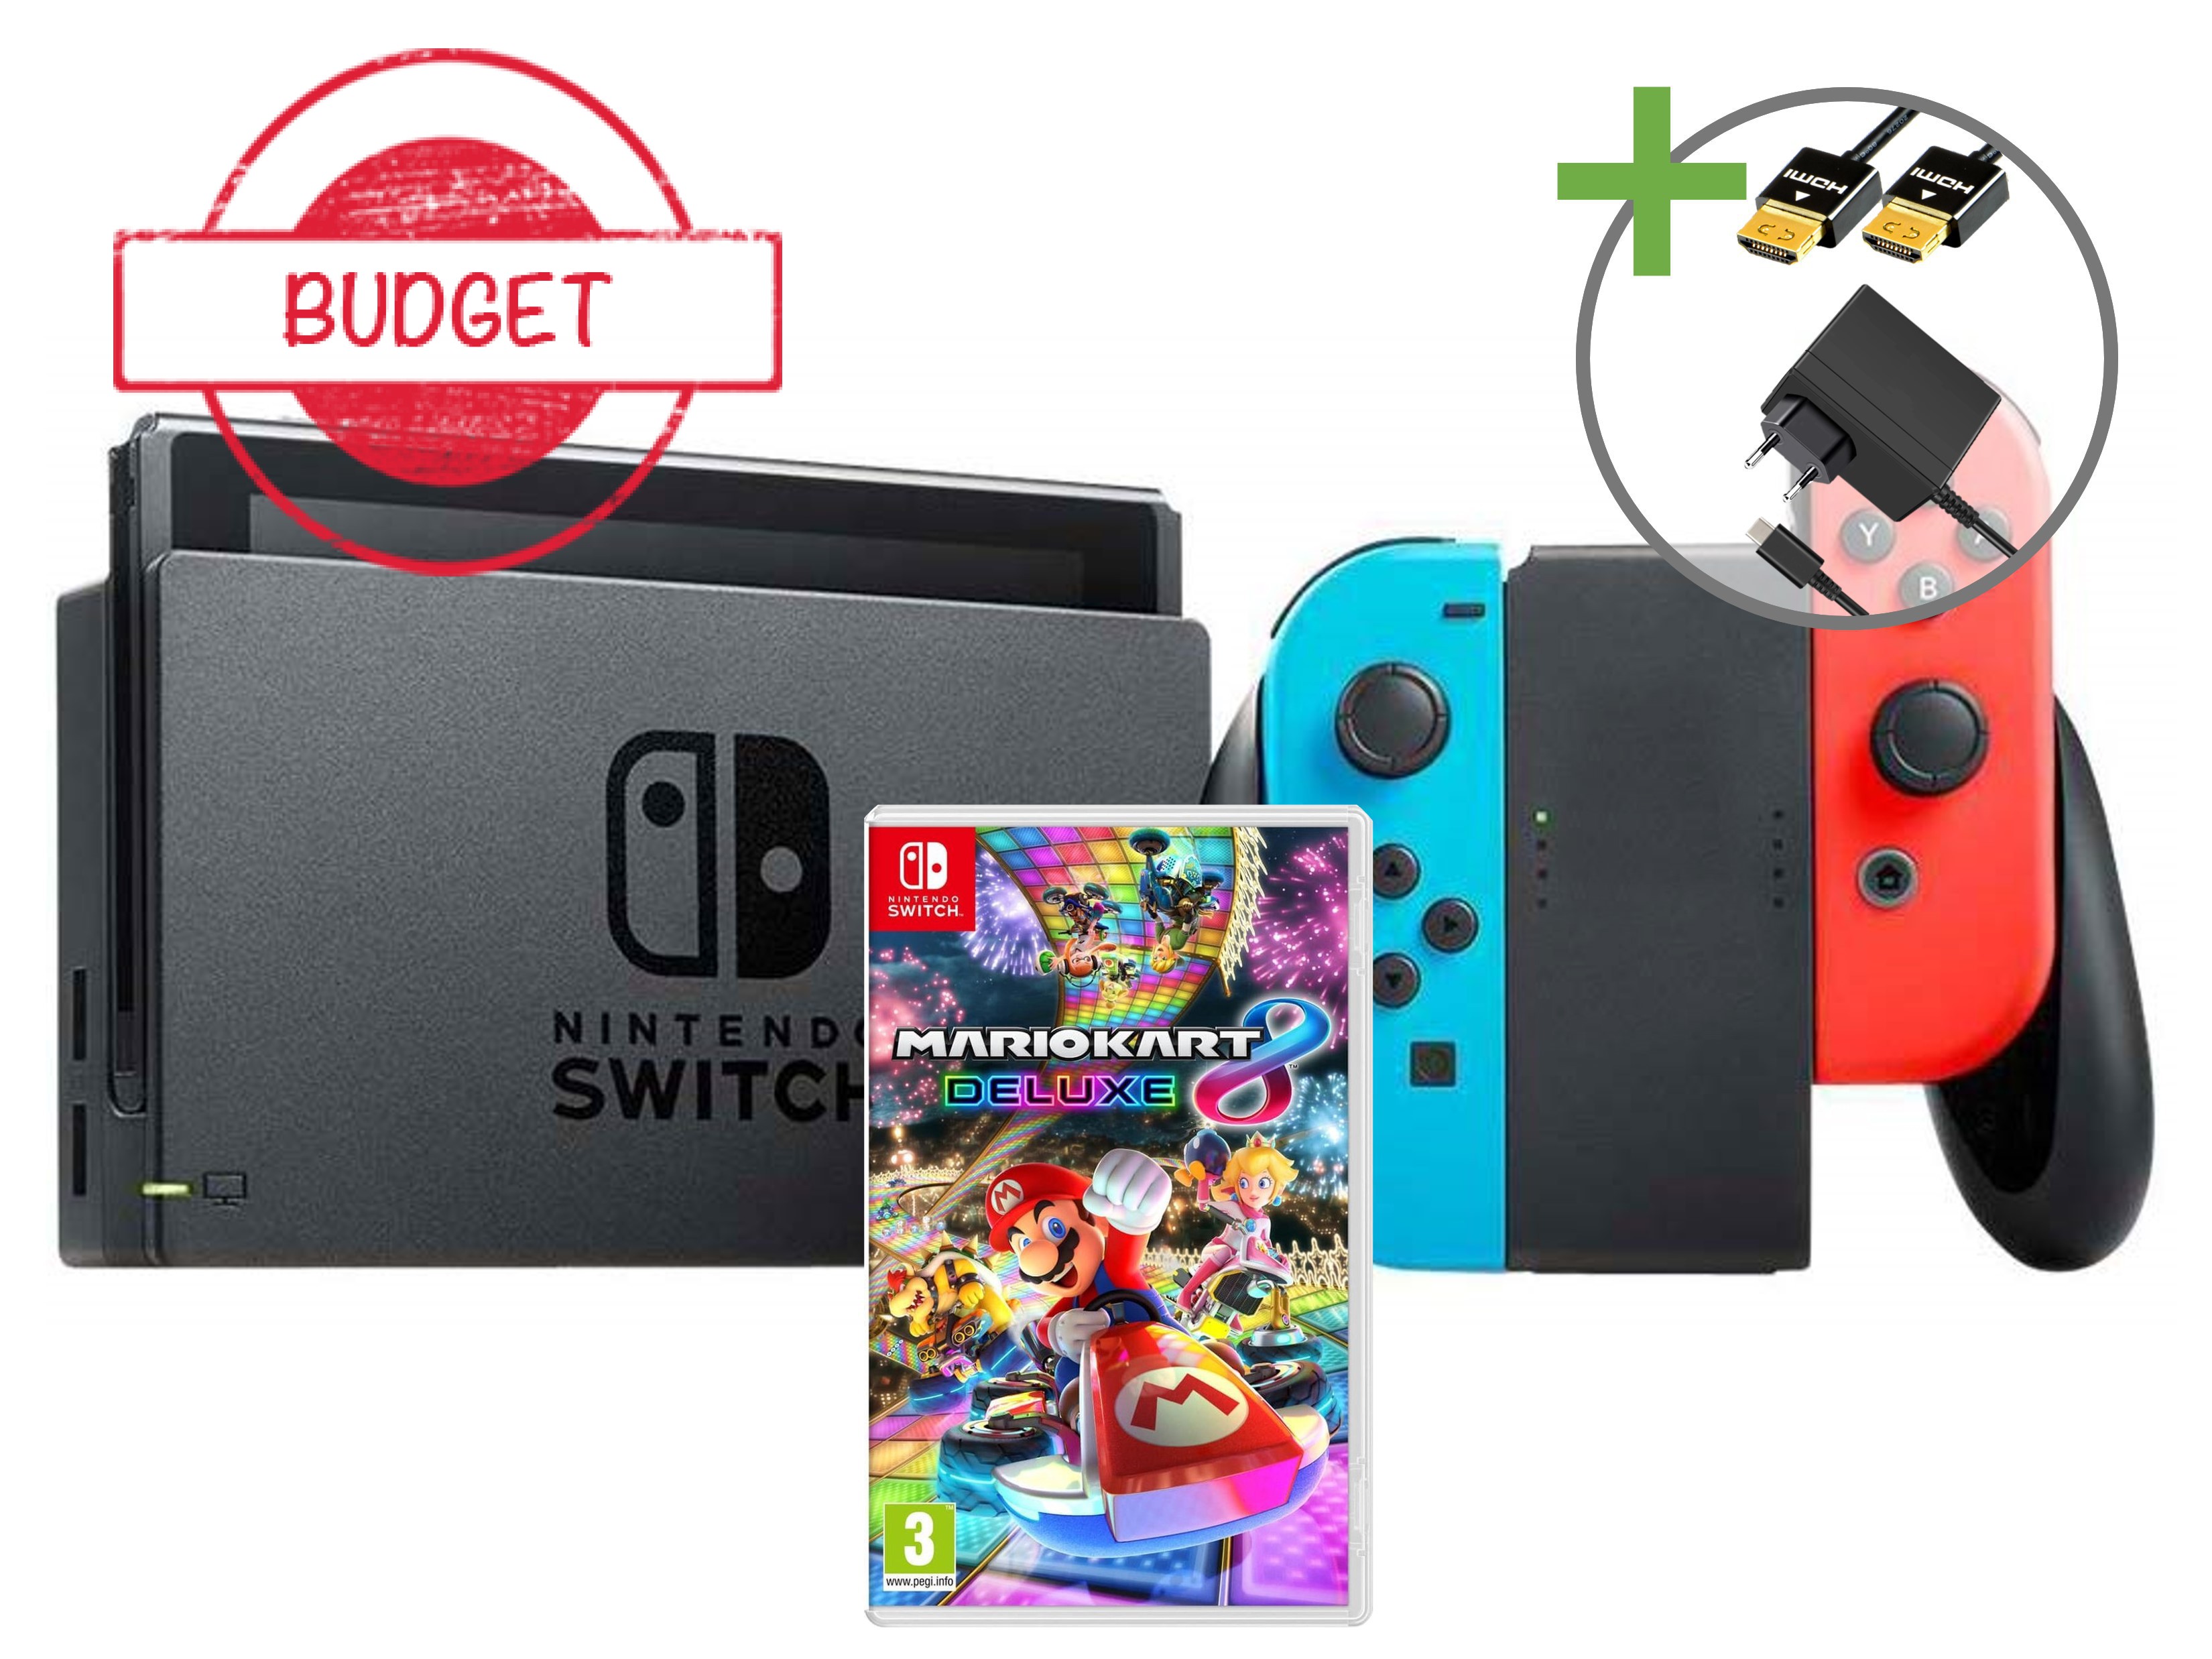 Nintendo Switch Starter Pack - Mario Kart 8 Deluxe Rood/Blauw Edition - Budget Kopen | Nintendo Switch Hardware